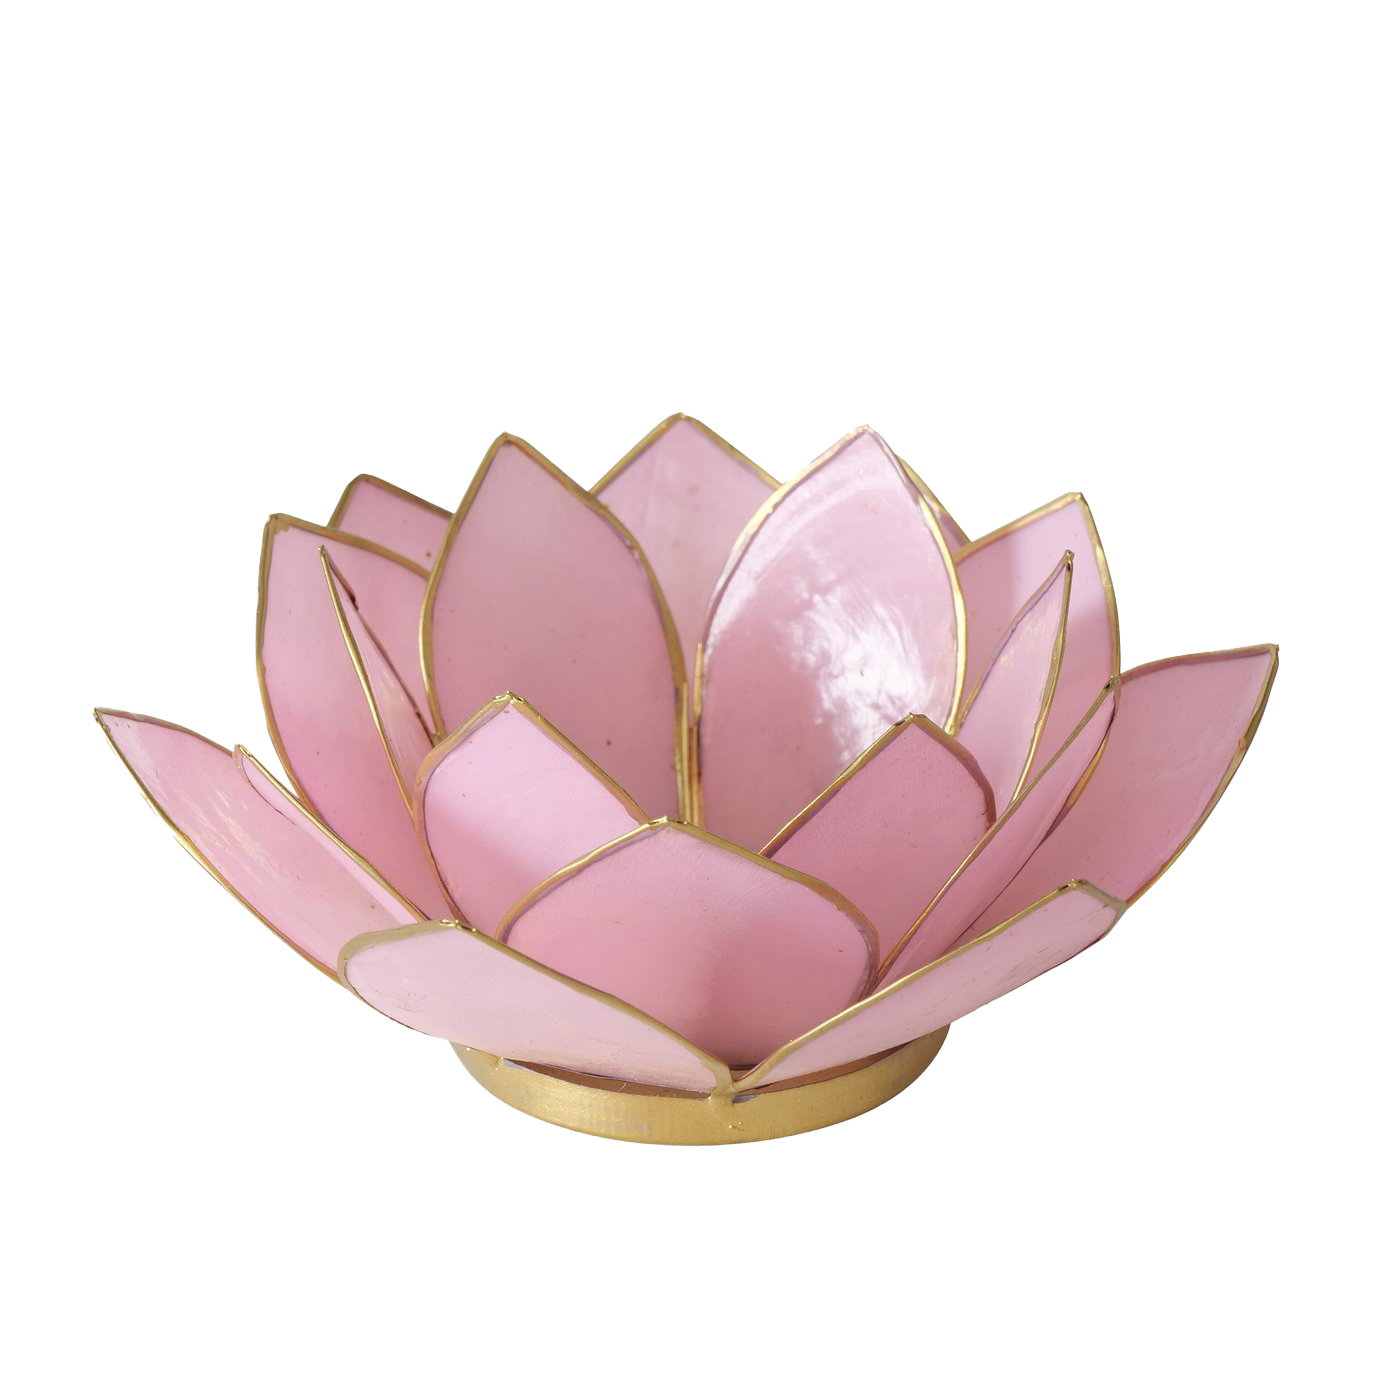 Lotusbloem waxinelichthouder light pink